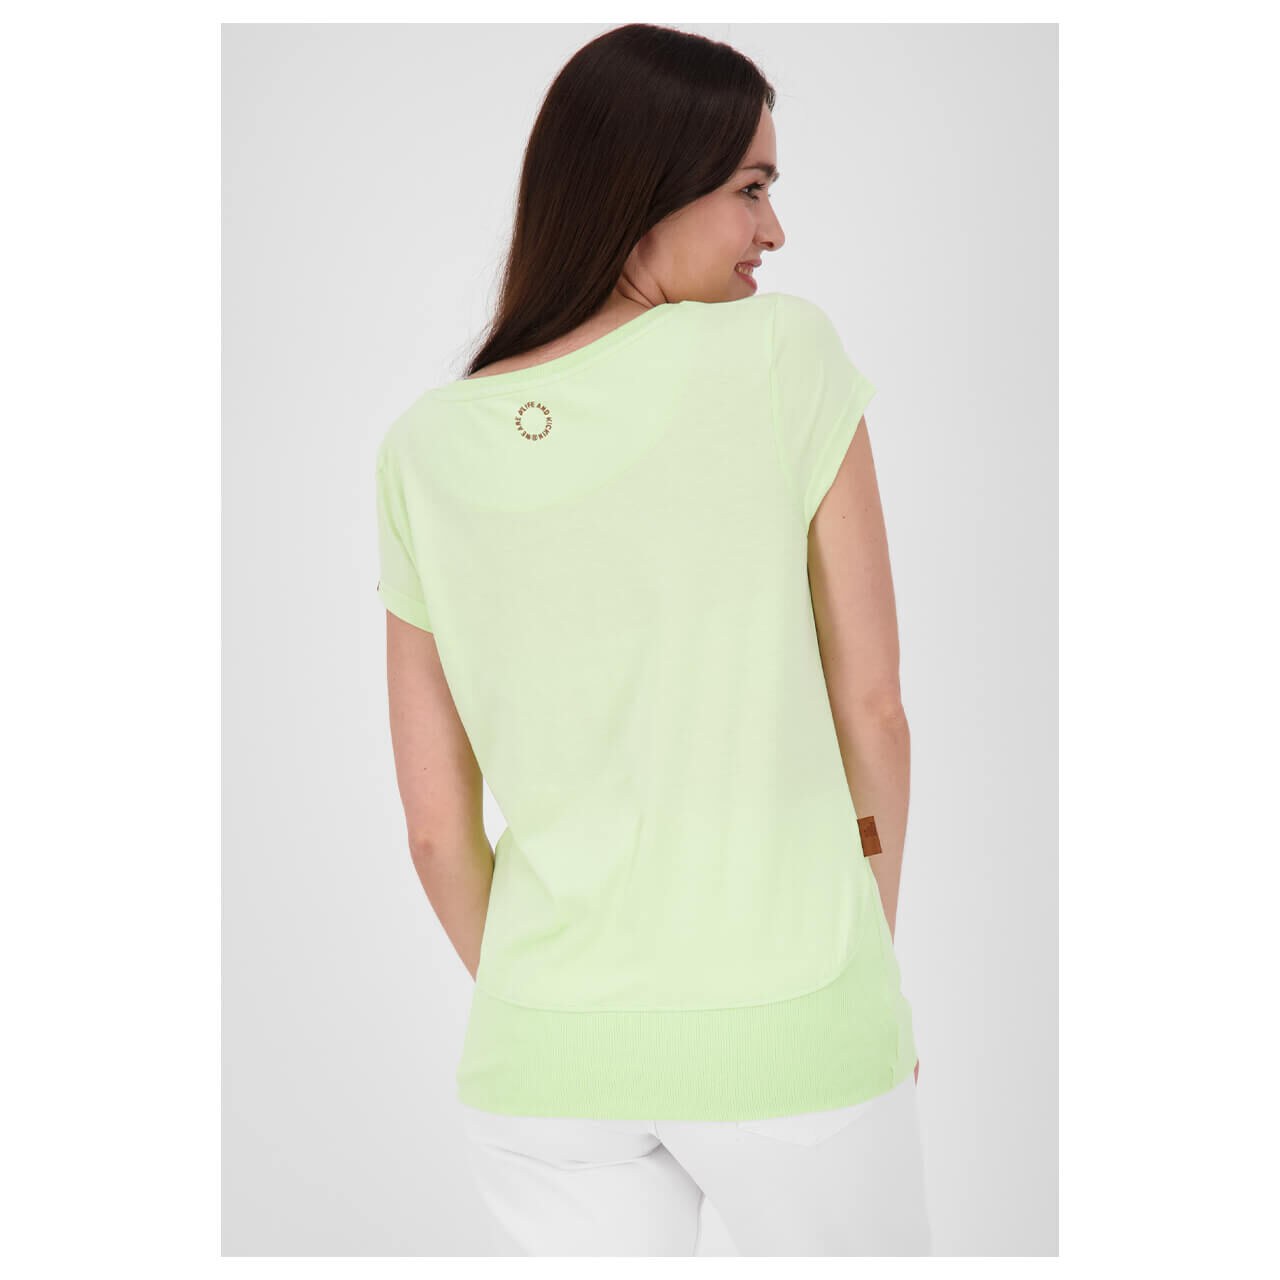 Alife and Kickin Coco A T-Shirt für Damen in Limette, FarbNr.: 1300